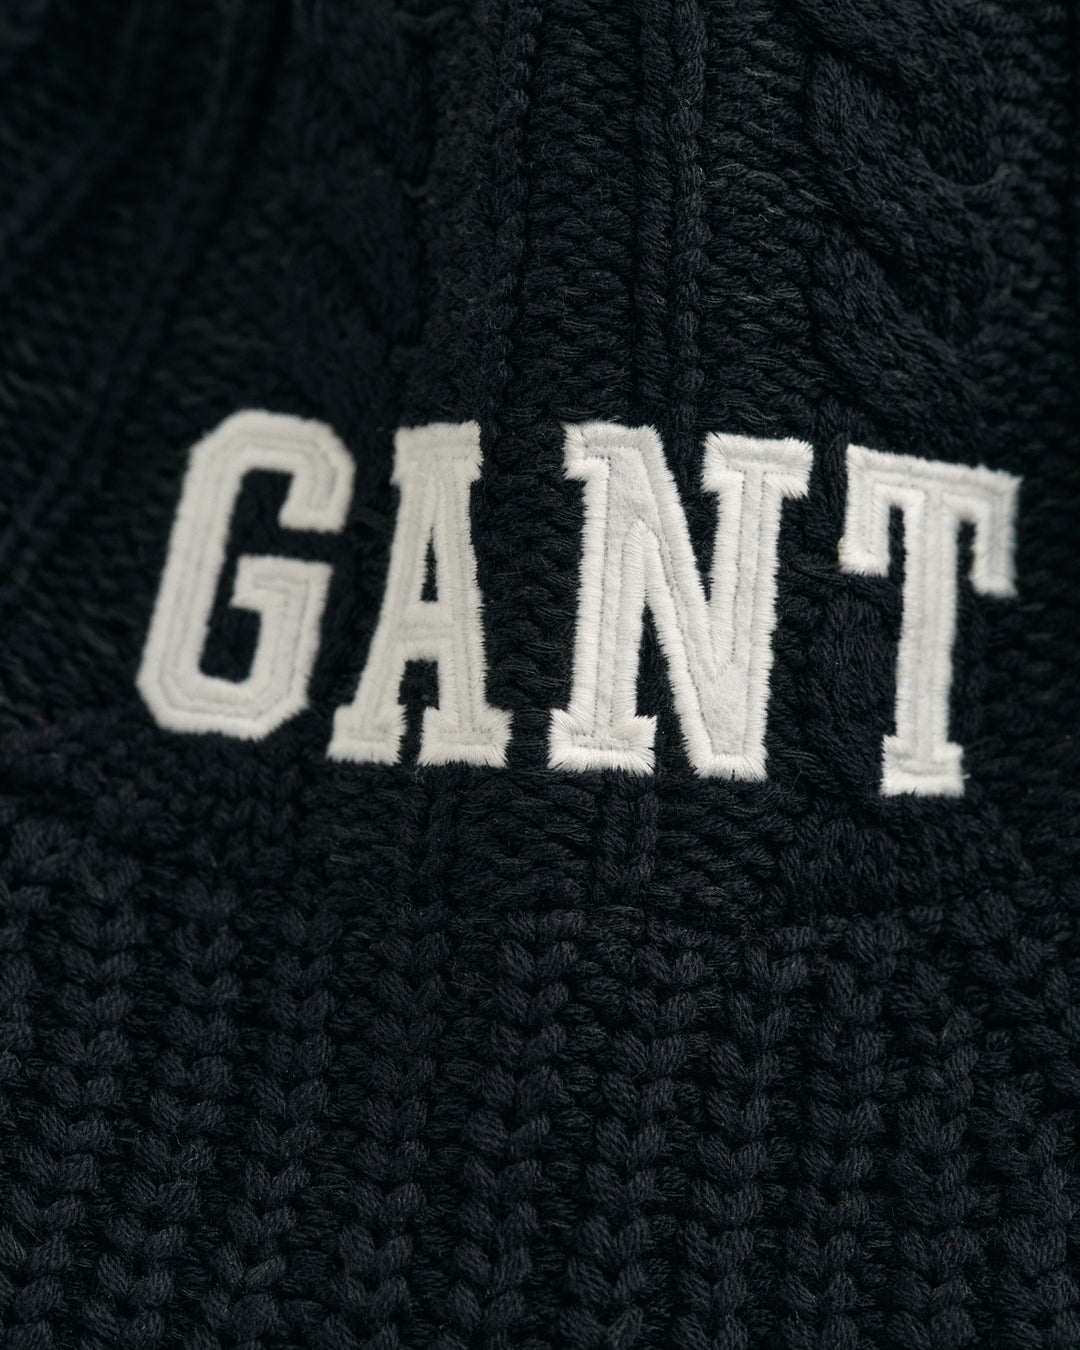 GANT Knitted Bell Hat /Šešir 4910040